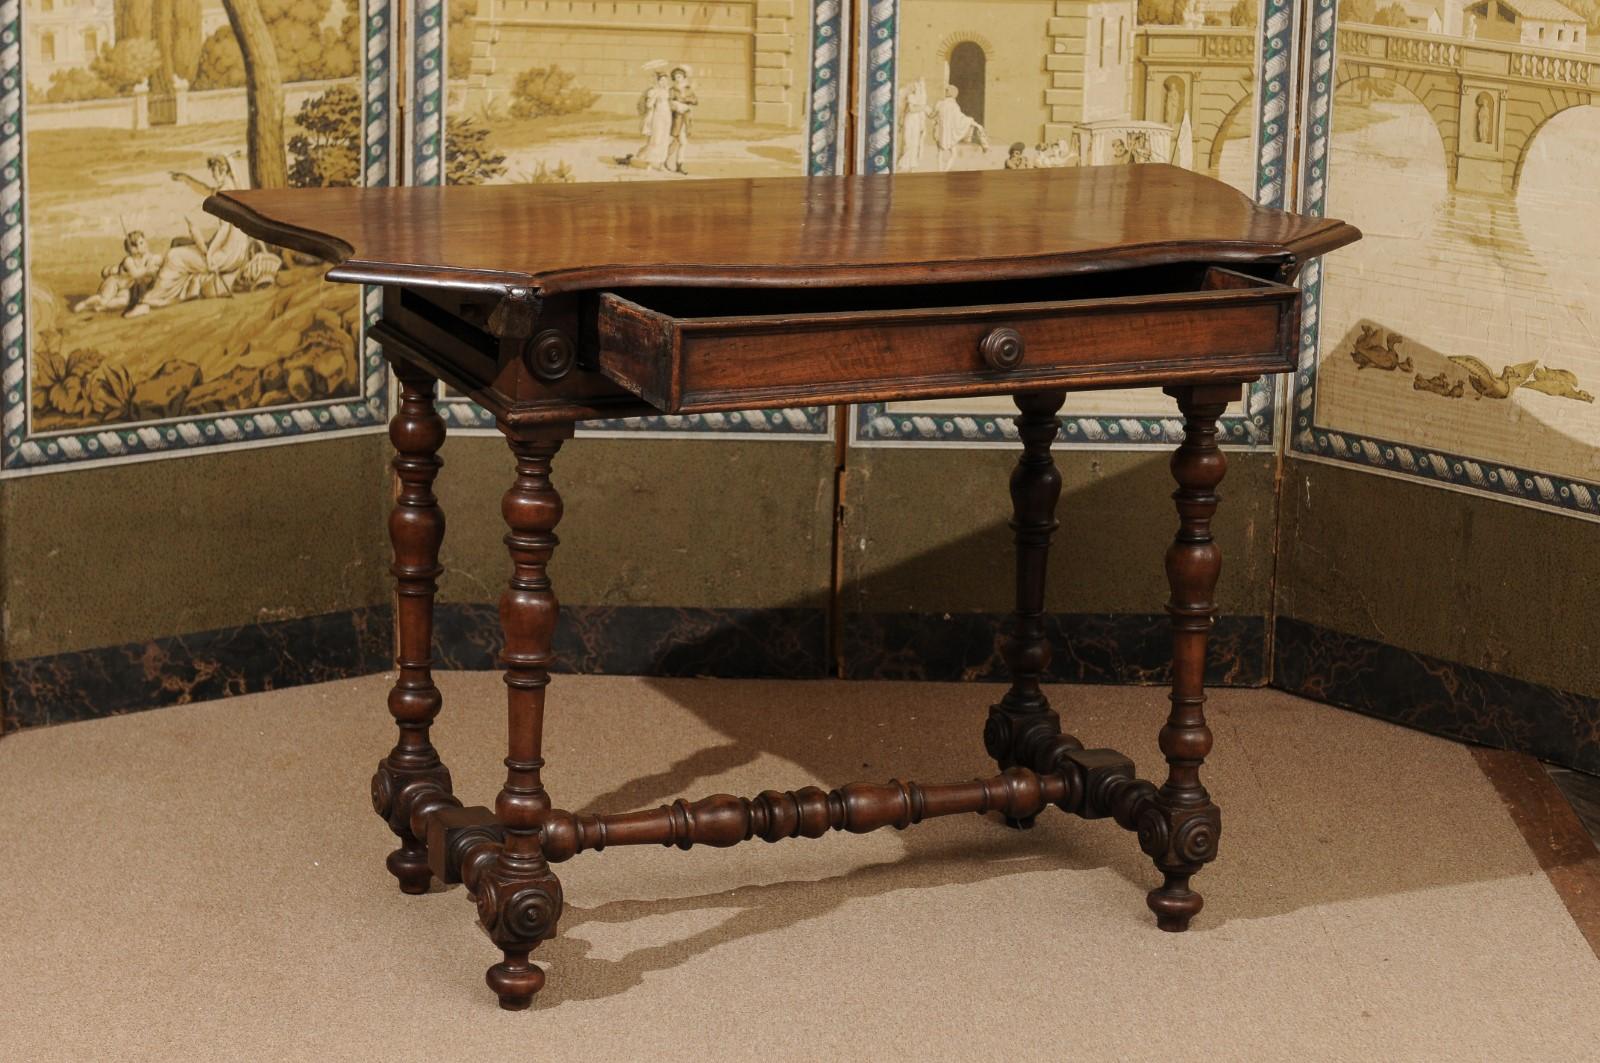 Turned Italian Baroque Walnut Serpentine Console Table, Late 17th Century